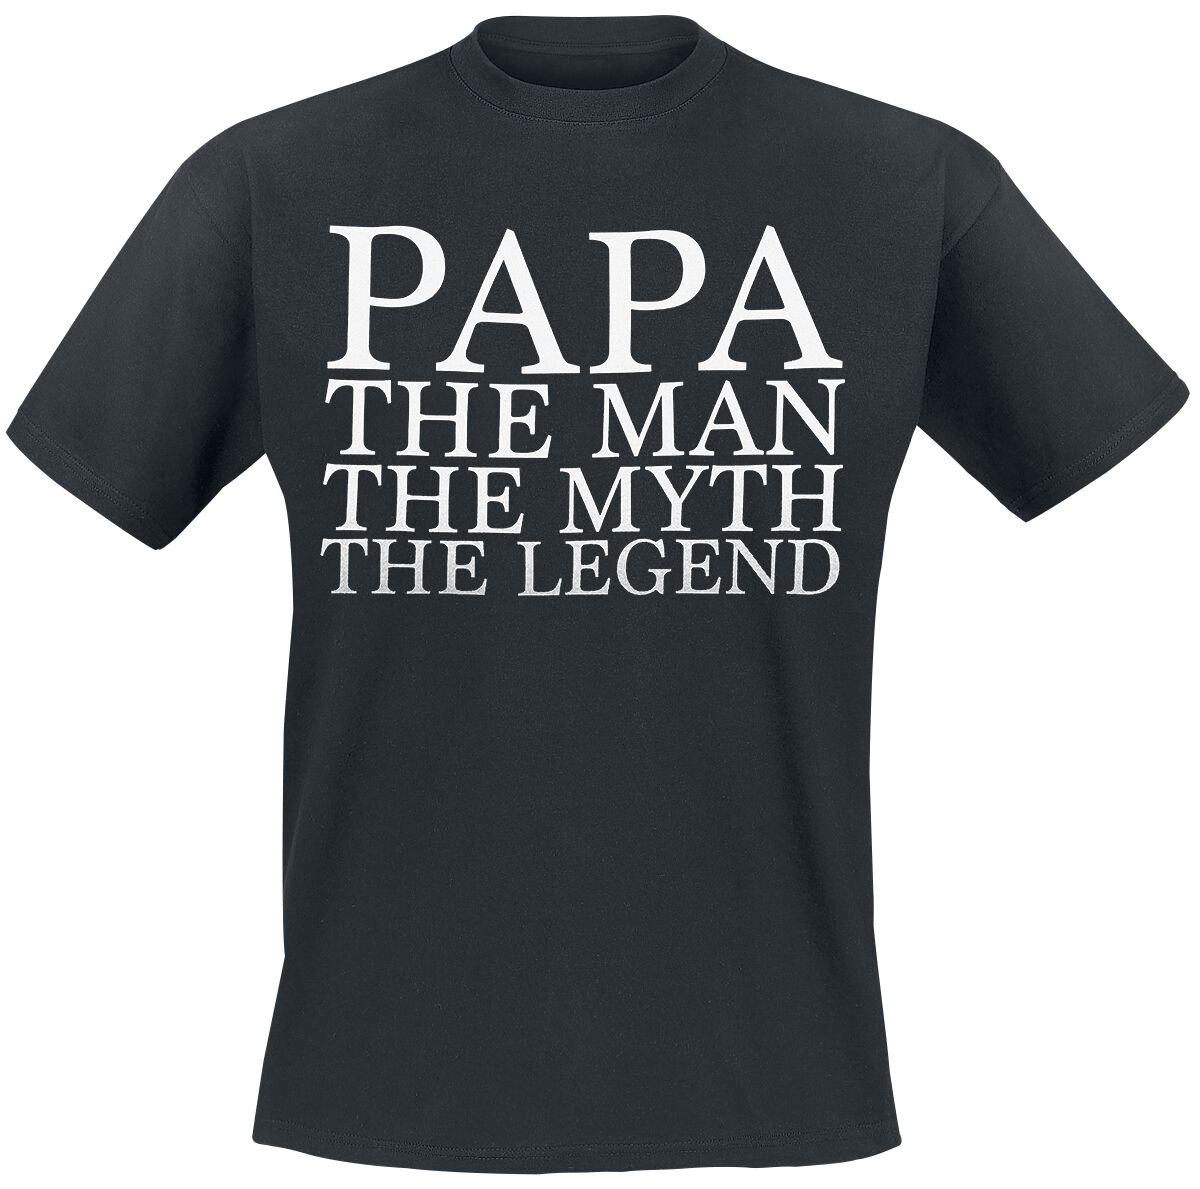 Familie & Freunde Papa - The Man T-Shirt schwarz in M